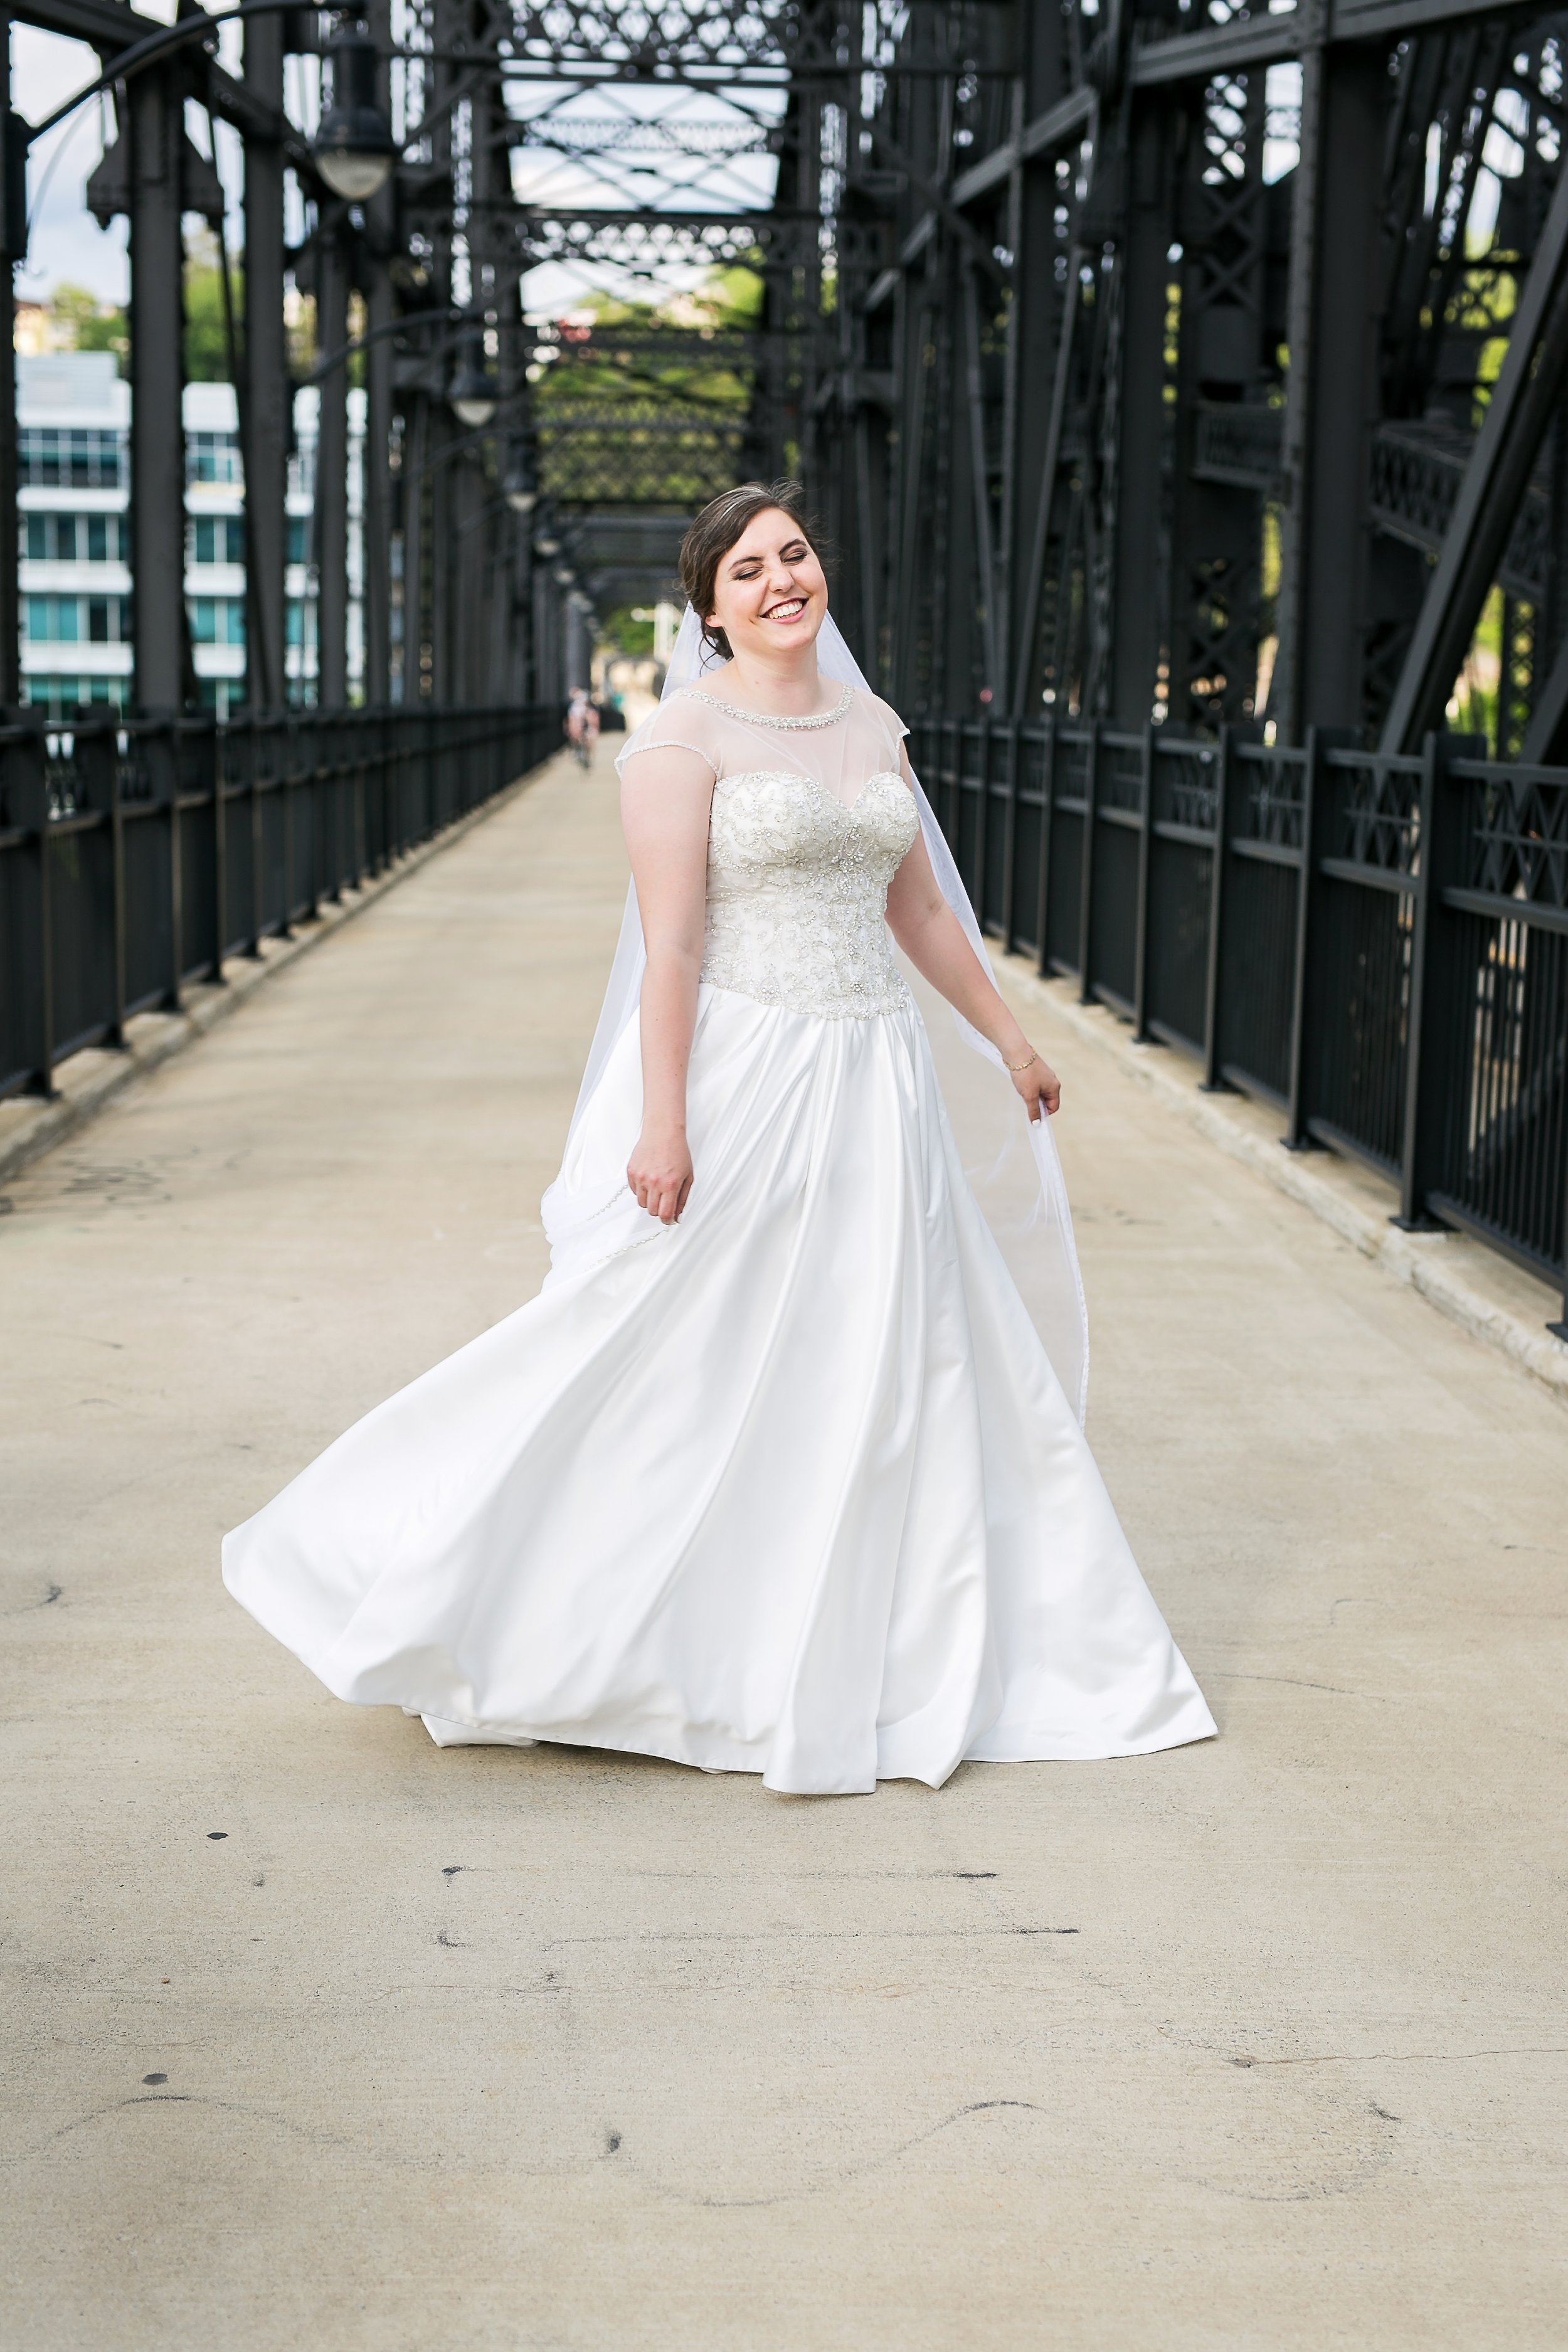 bride spins in her dress